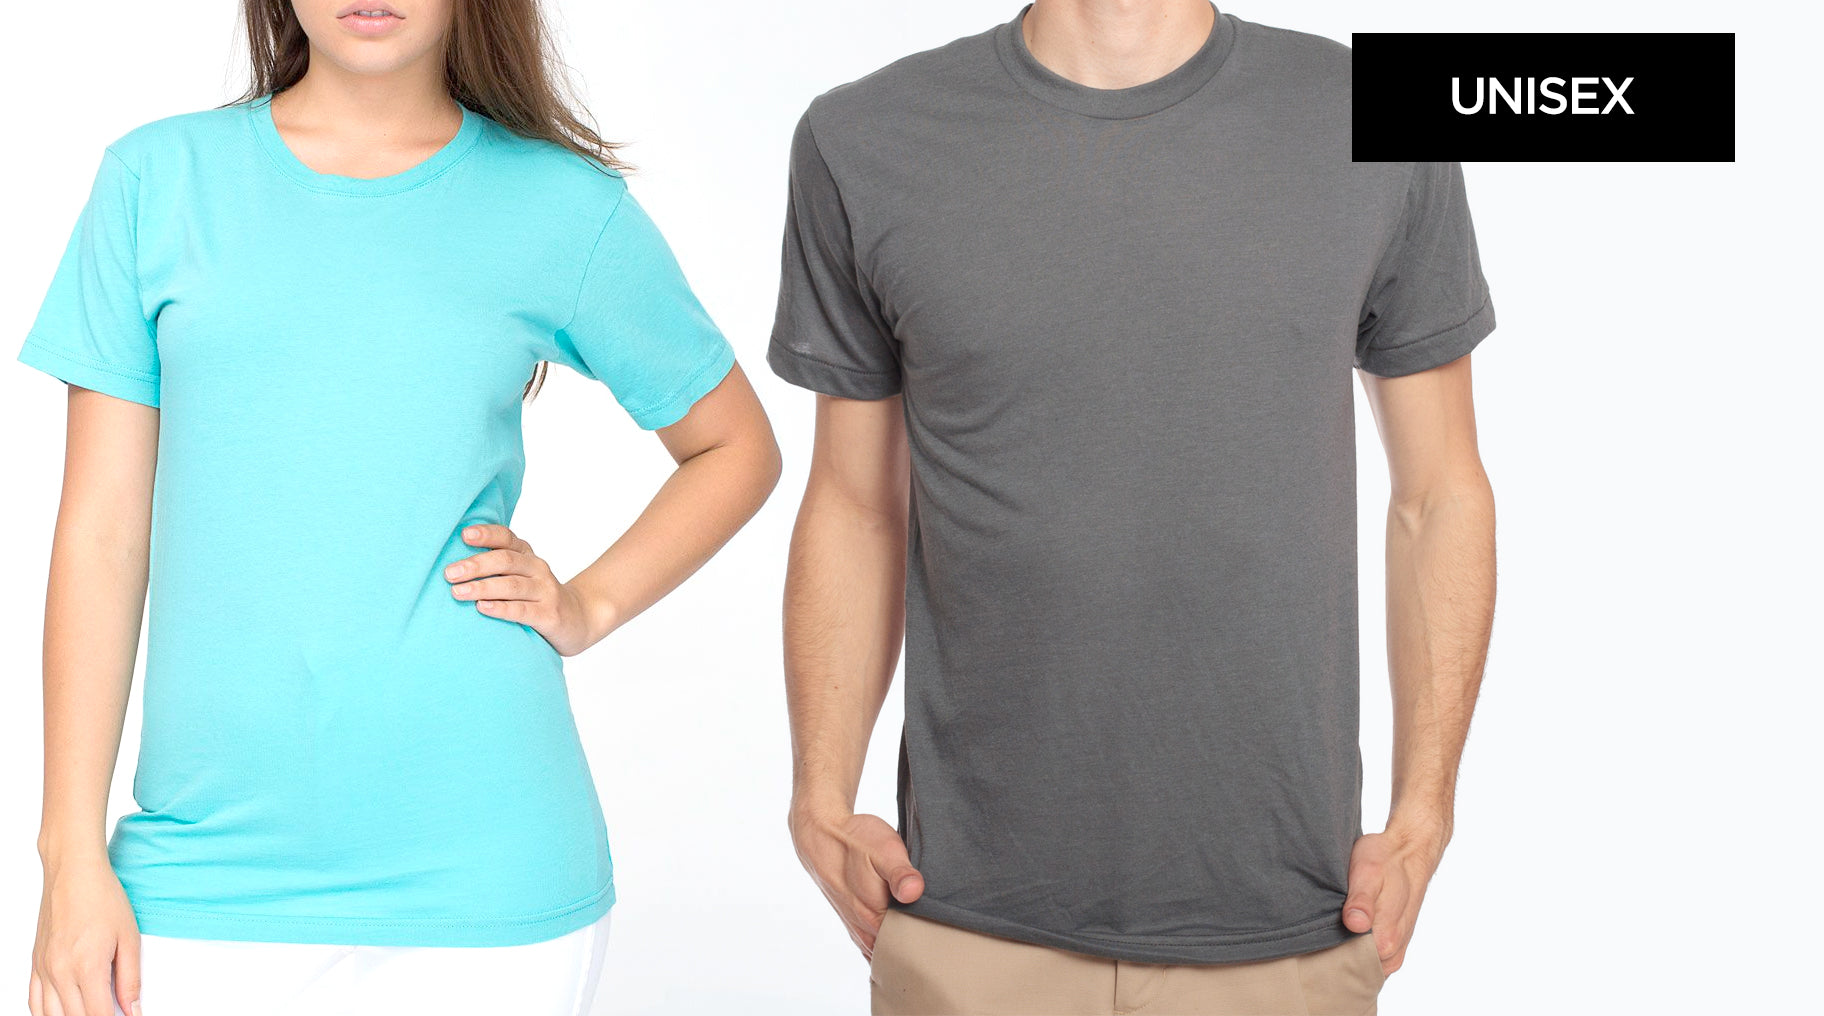 Do Unisex Shirts Run Big Or Small?